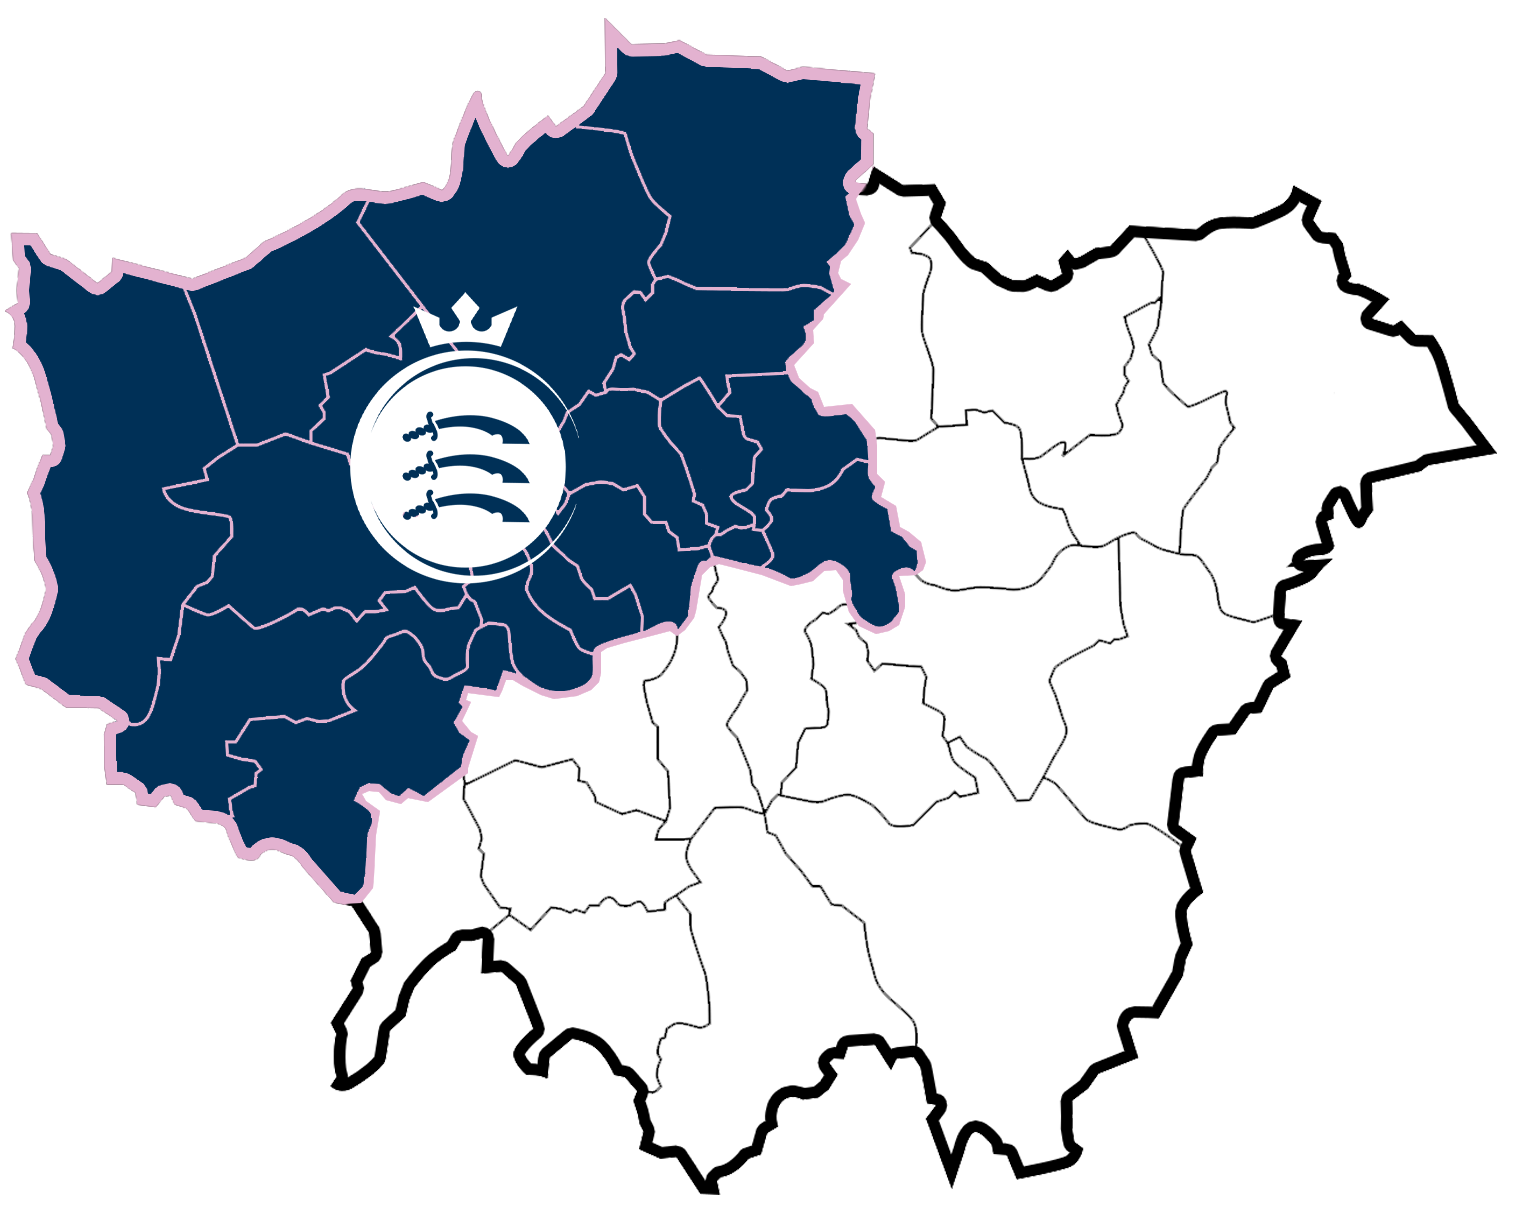 Middx_Map_-_London_Borough